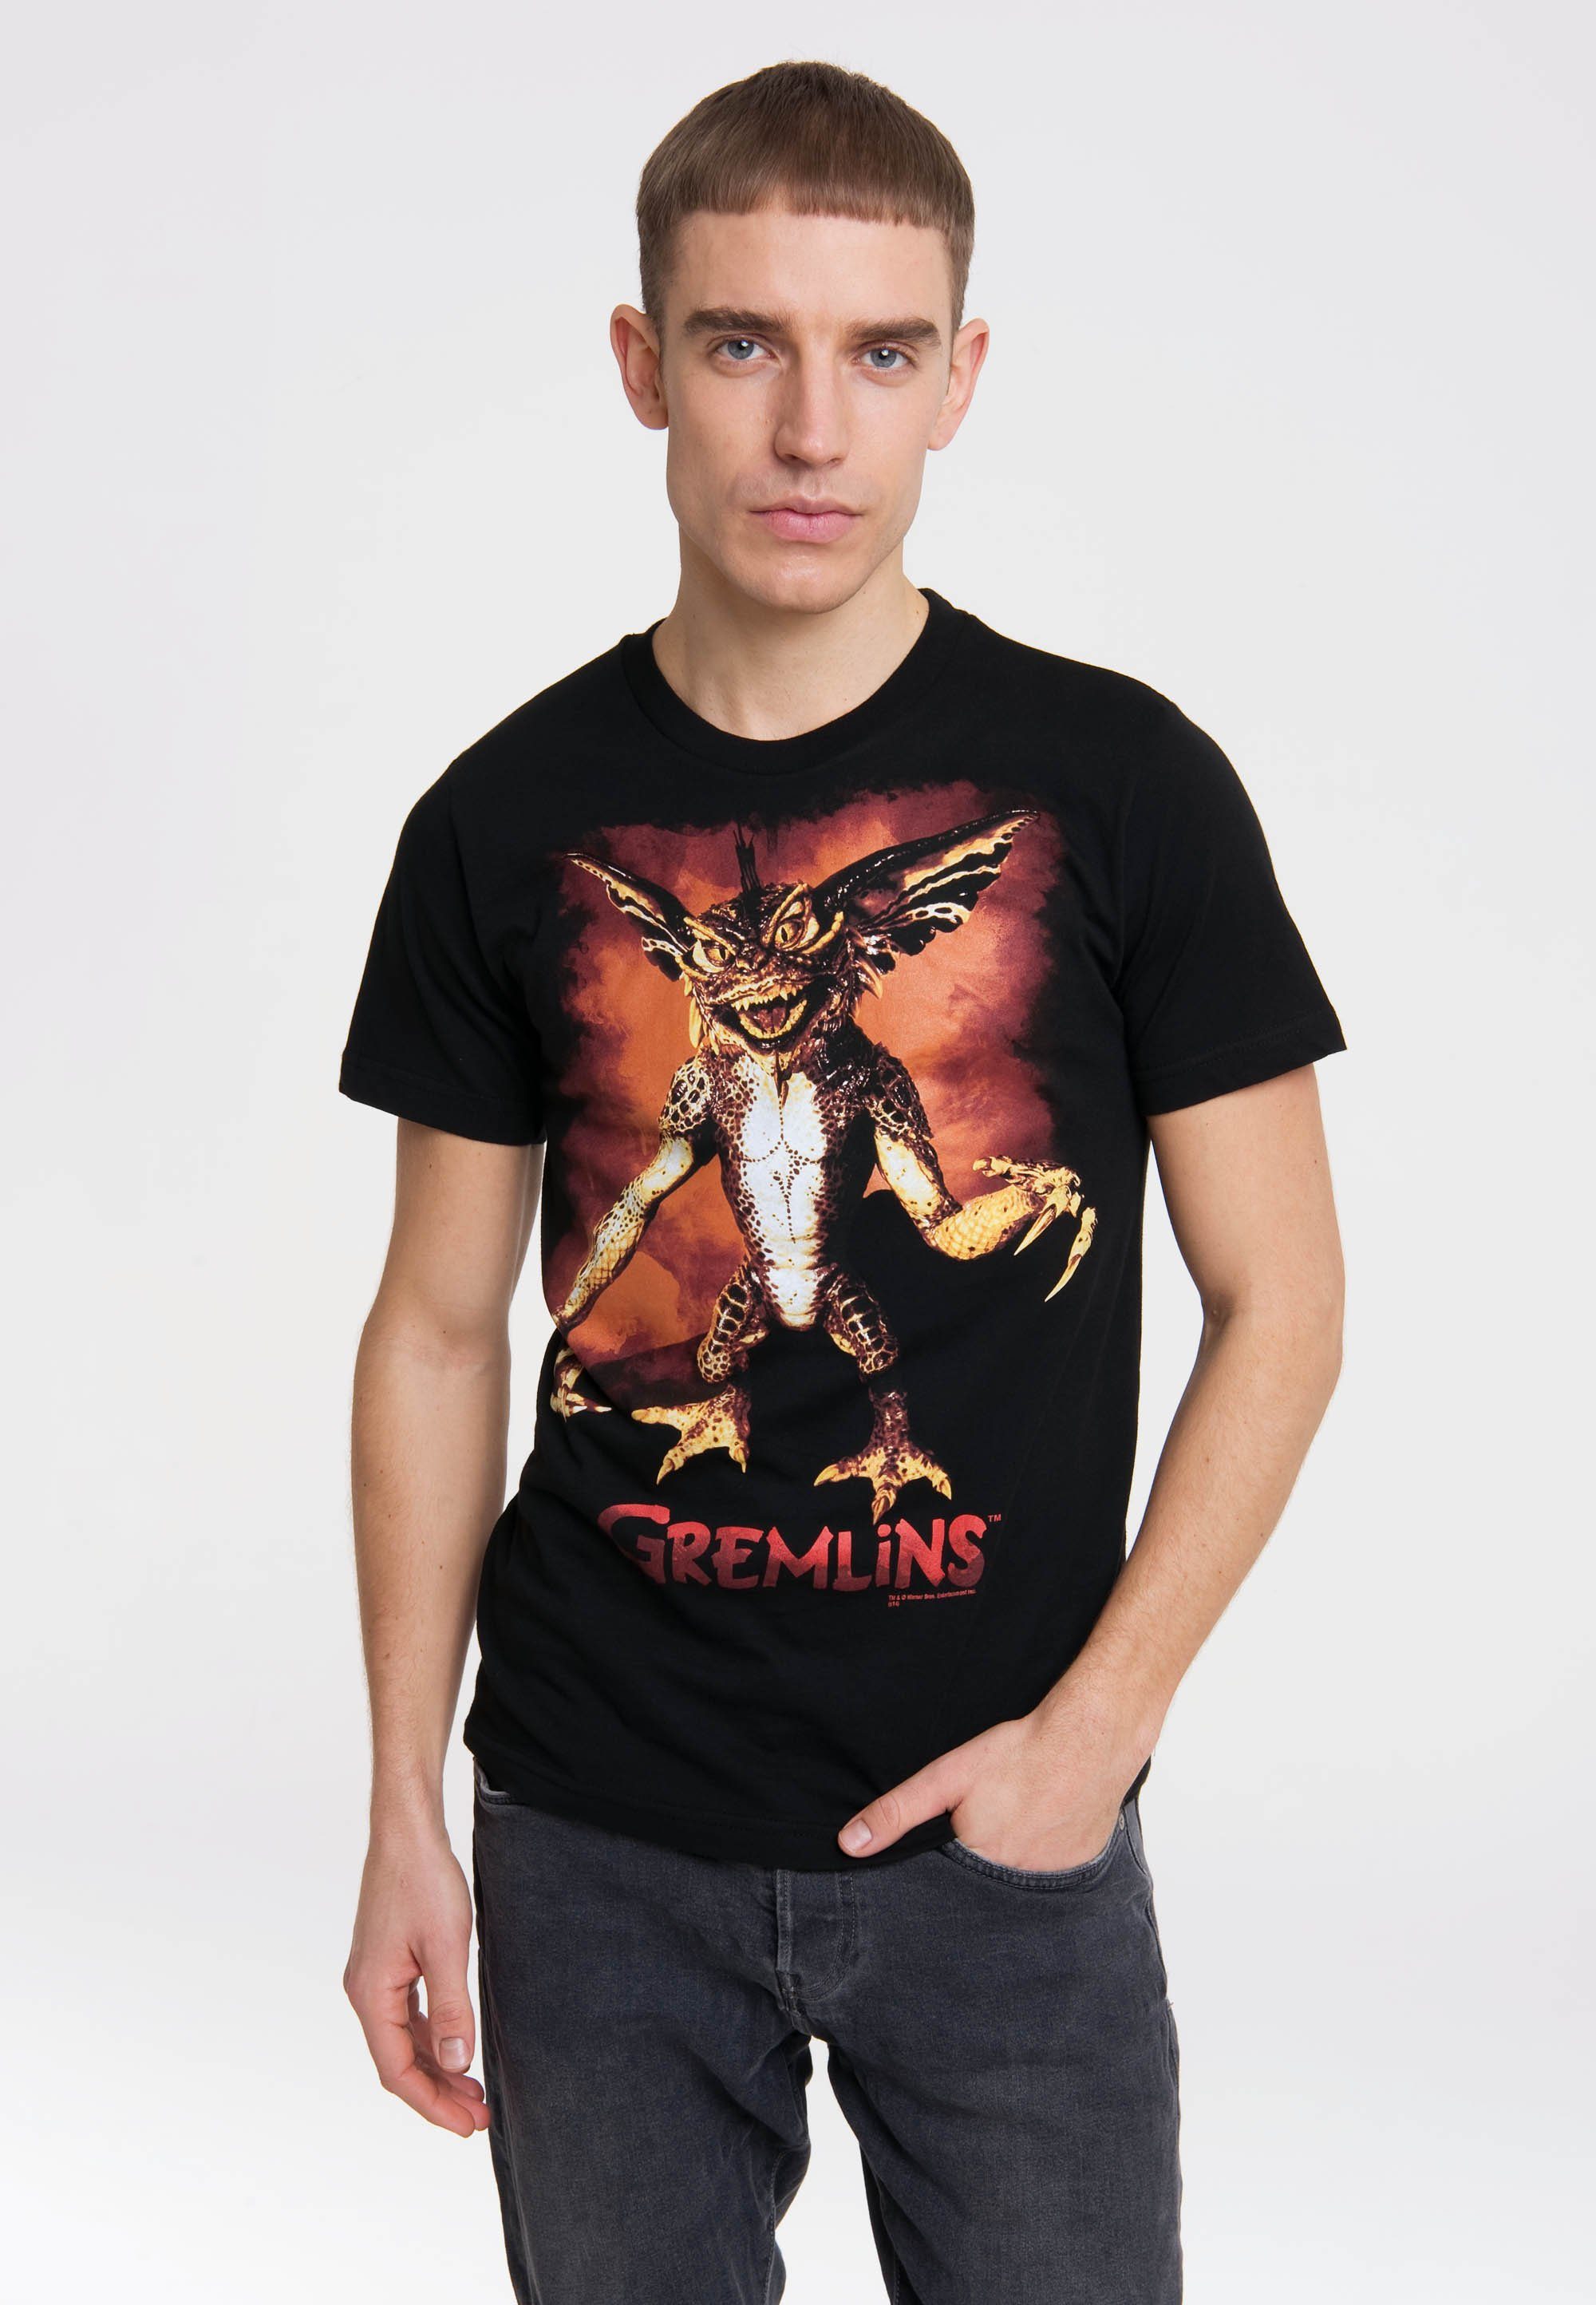 - Gremlin-Frontprint LOGOSHIRT Monster T-Shirt weltberühmtem Gremlins mit